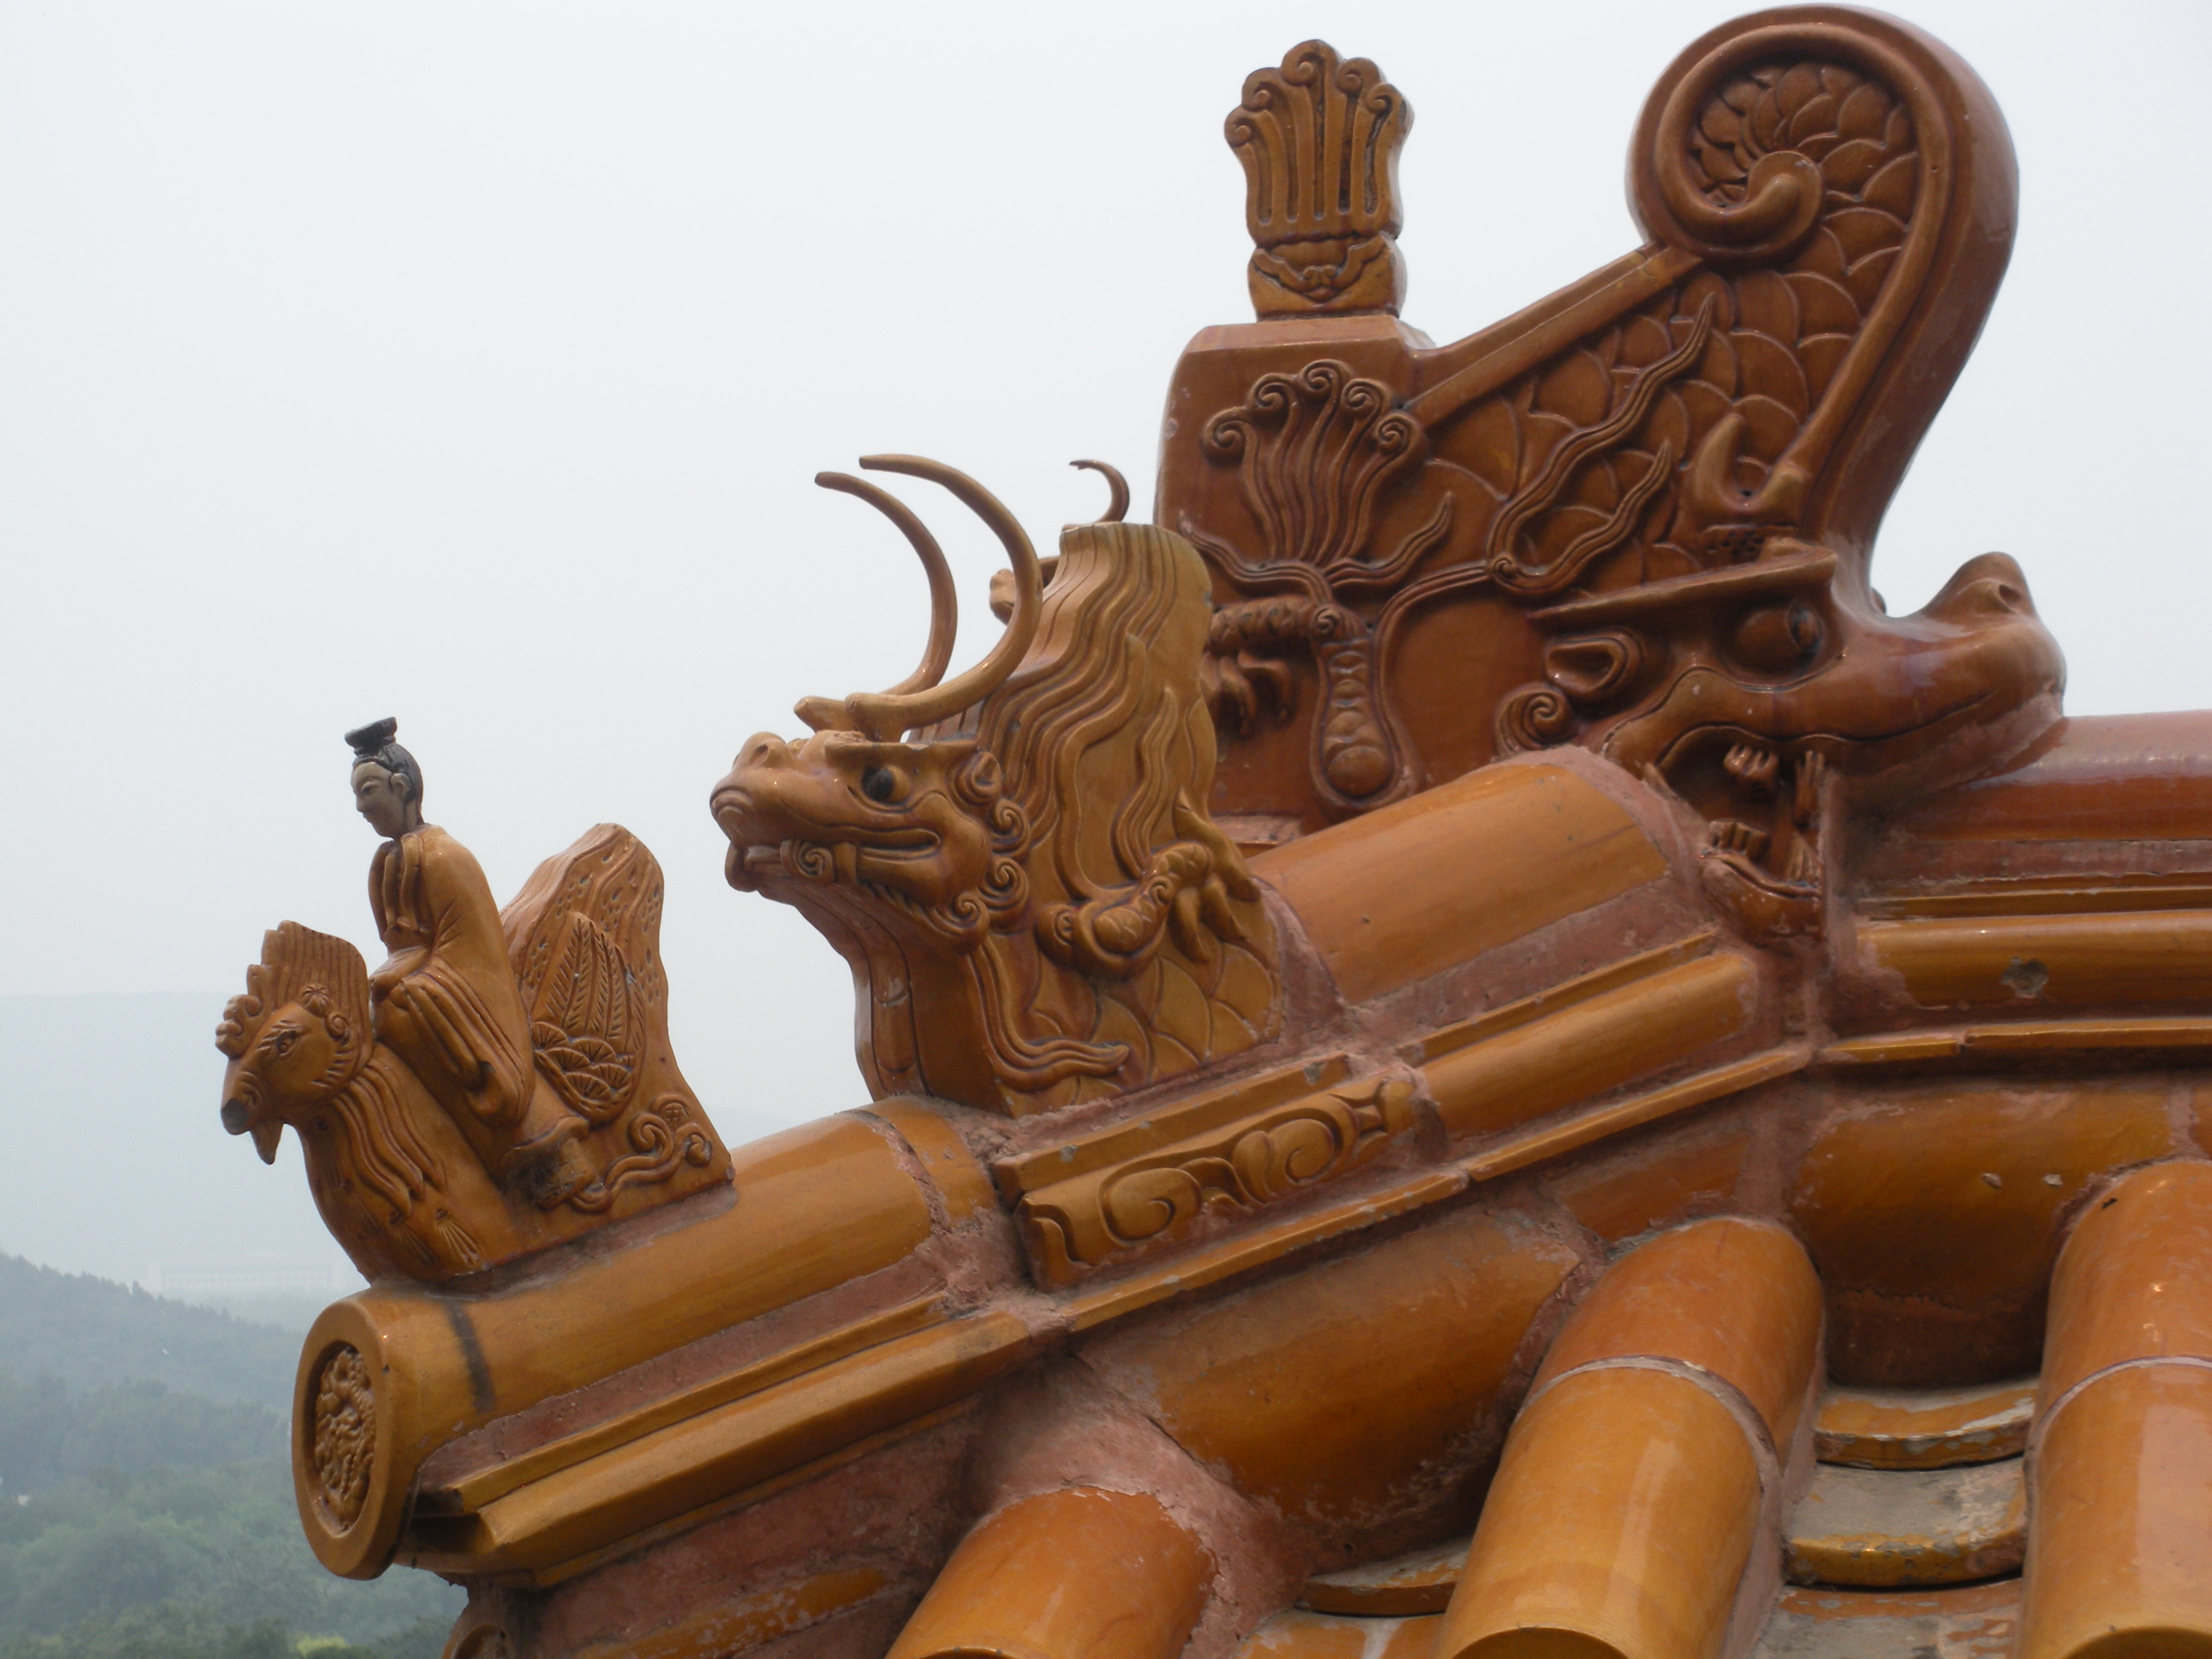 Glazed, yellow, figurines top Imperial rooftops in Beijing